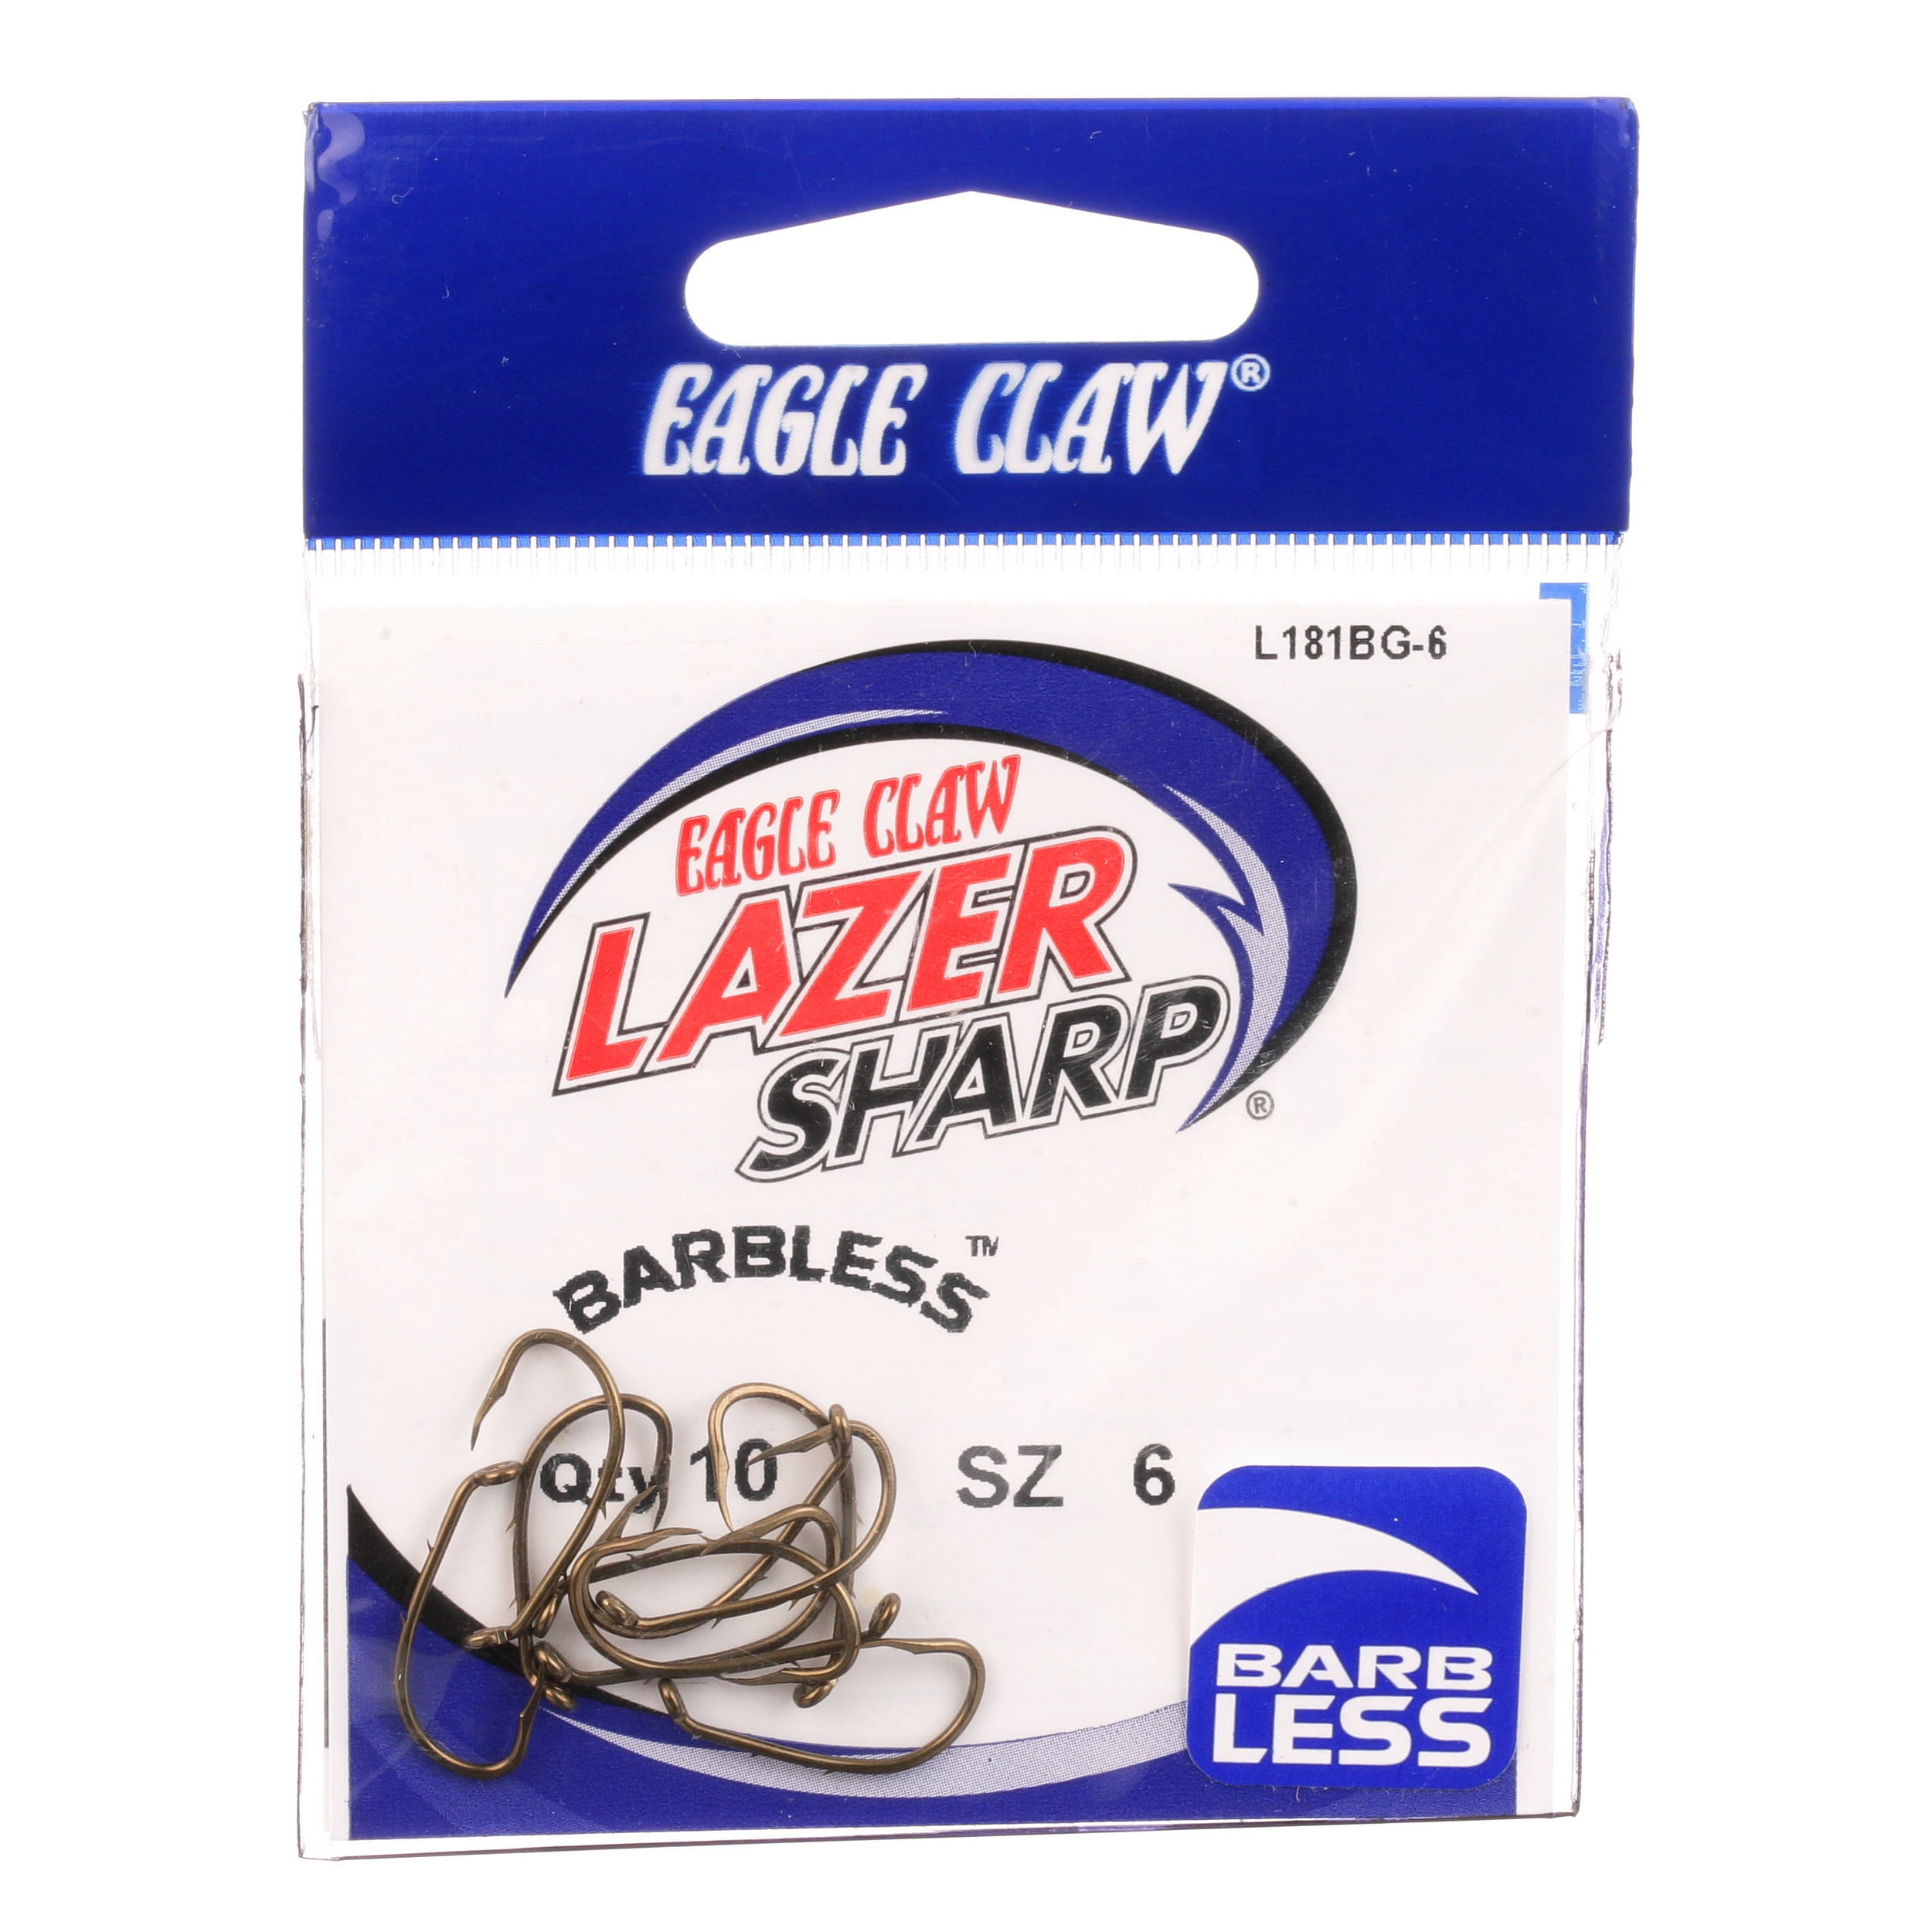 Eagle Claw Lazer Sharp L704 Baitholder Snelled Hook 12'' - Size 4